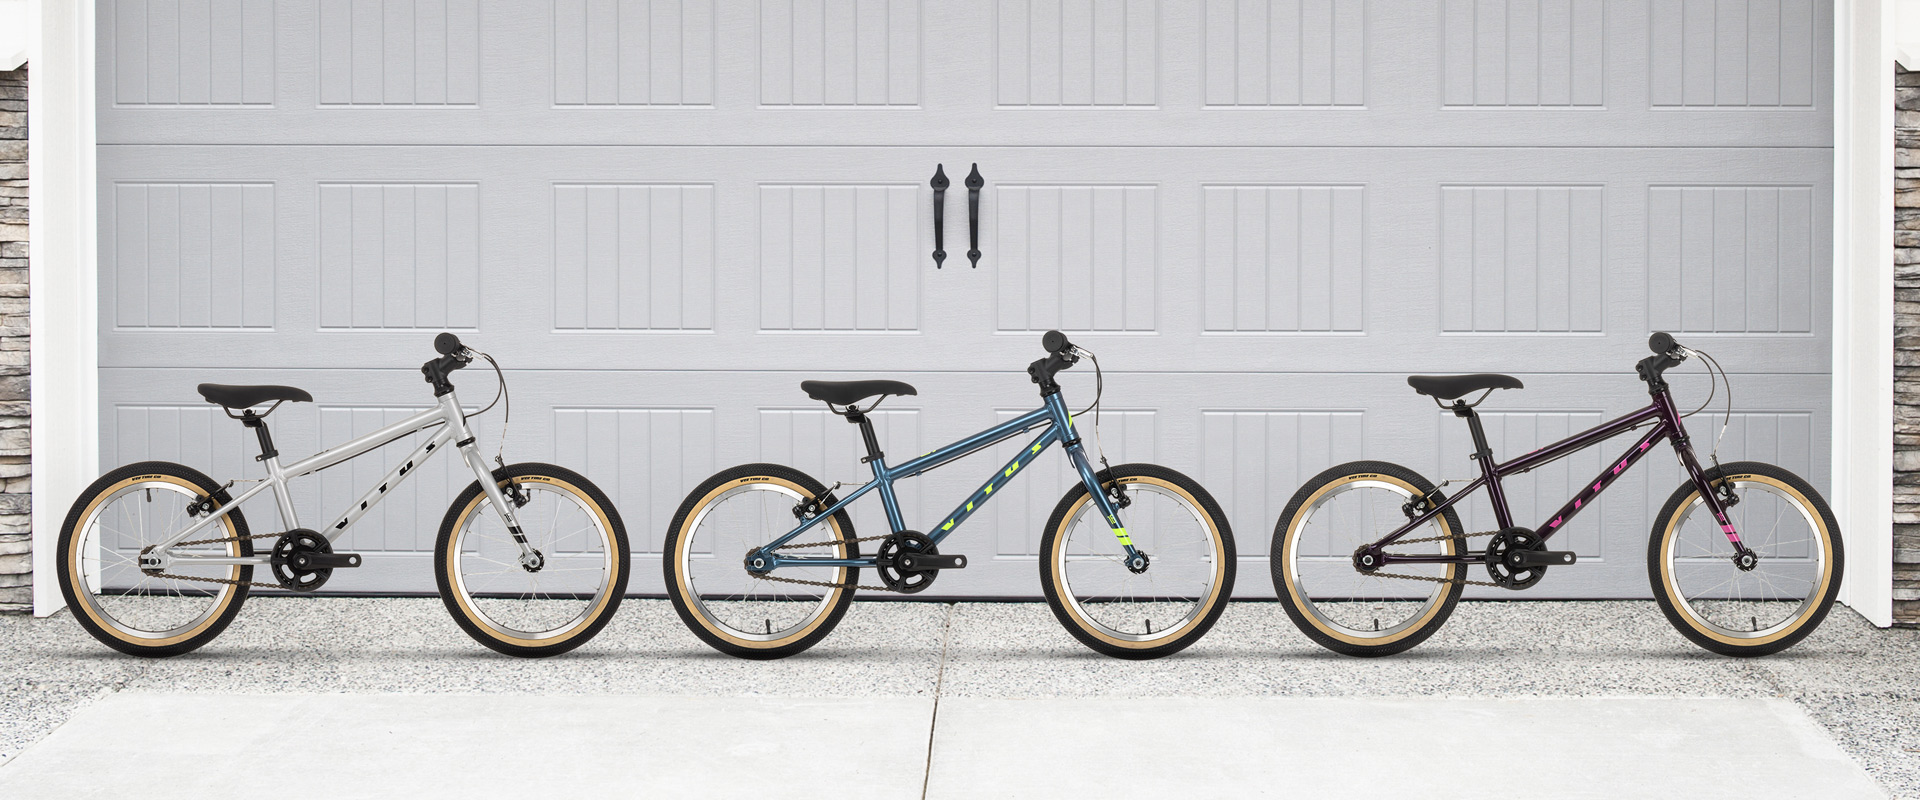 vitus 16 inch bike